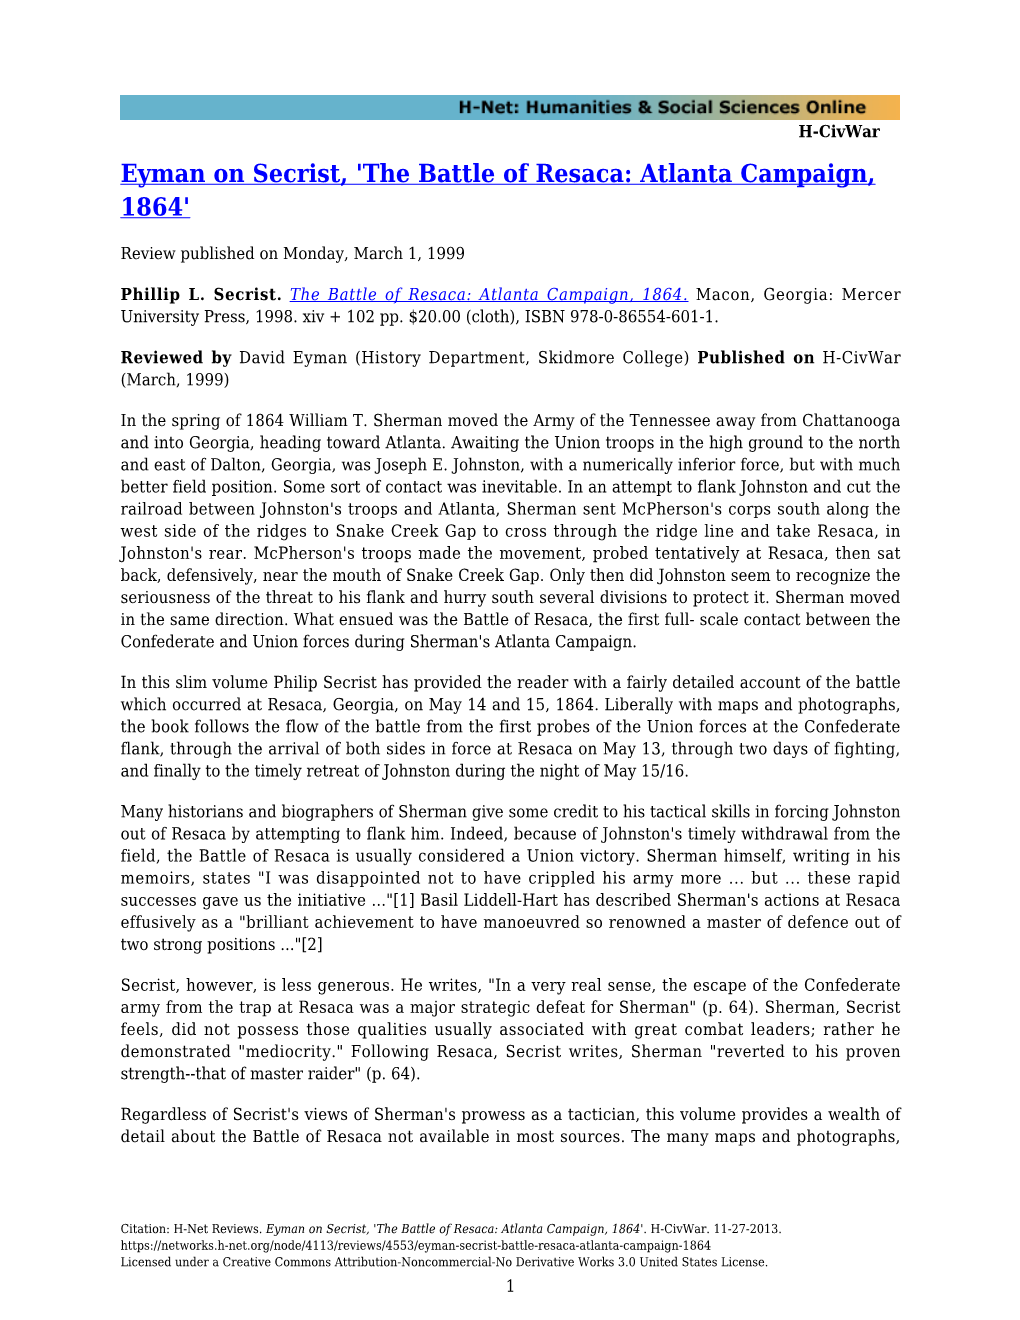 Eyman on Secrist, 'The Battle of Resaca: Atlanta Campaign, 1864'